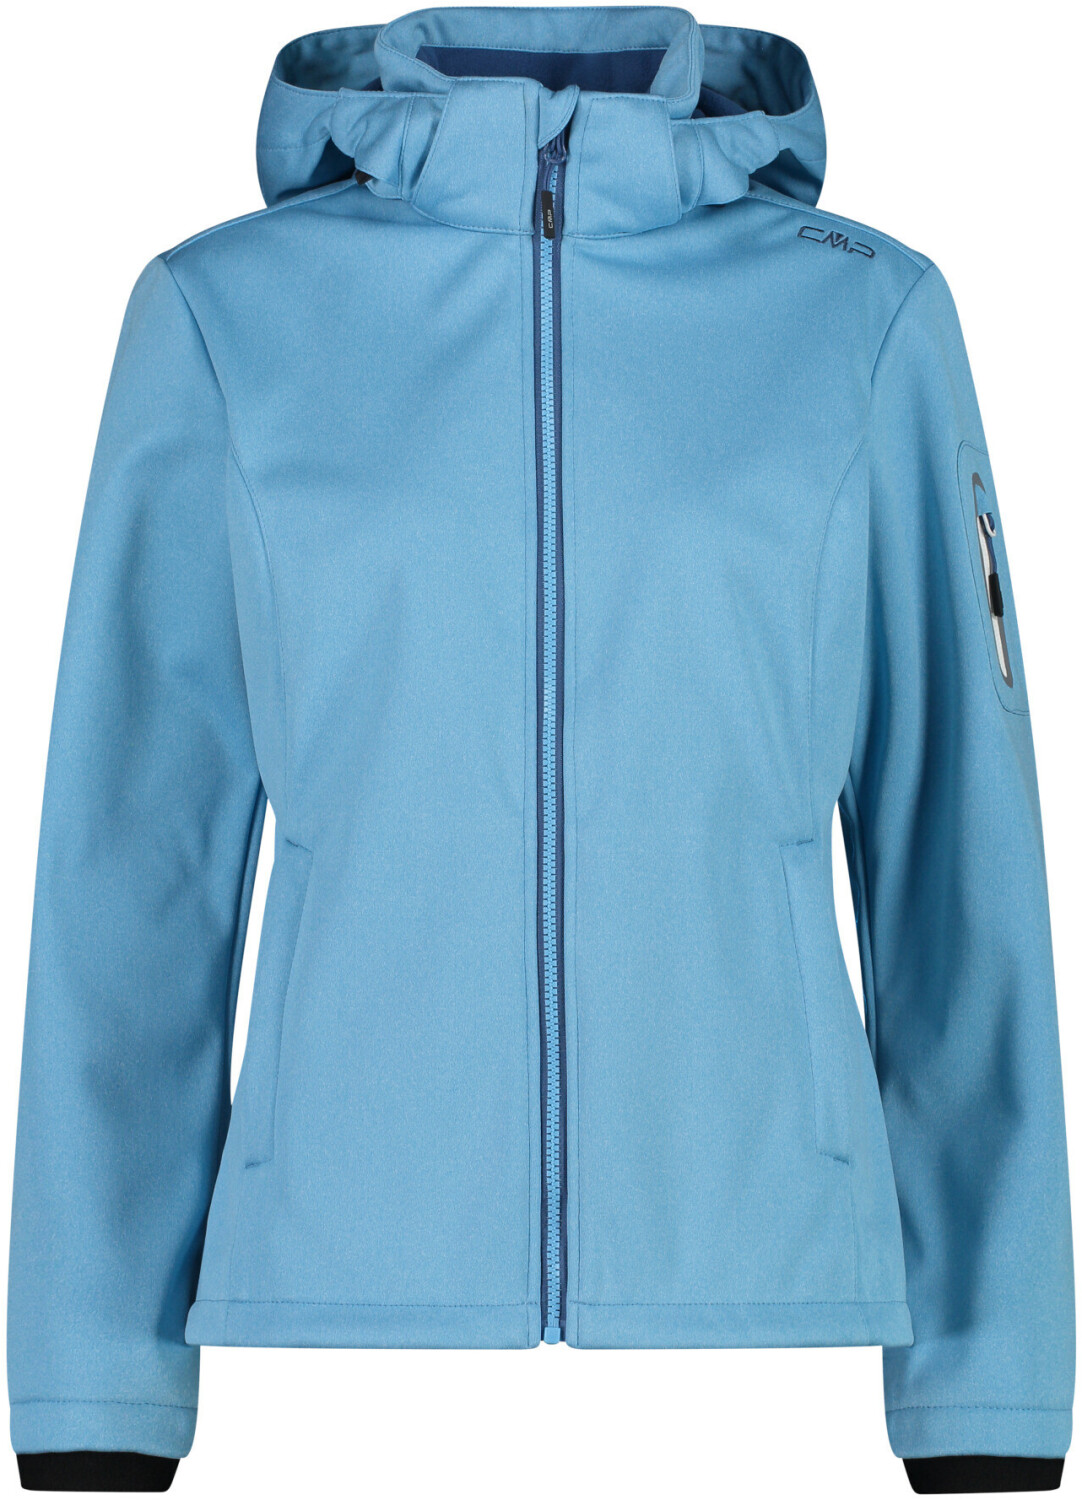 CMP Woman Jacket Zip Hood (39A5006M) cielo mel. ab 44,54 € | Preisvergleich  bei